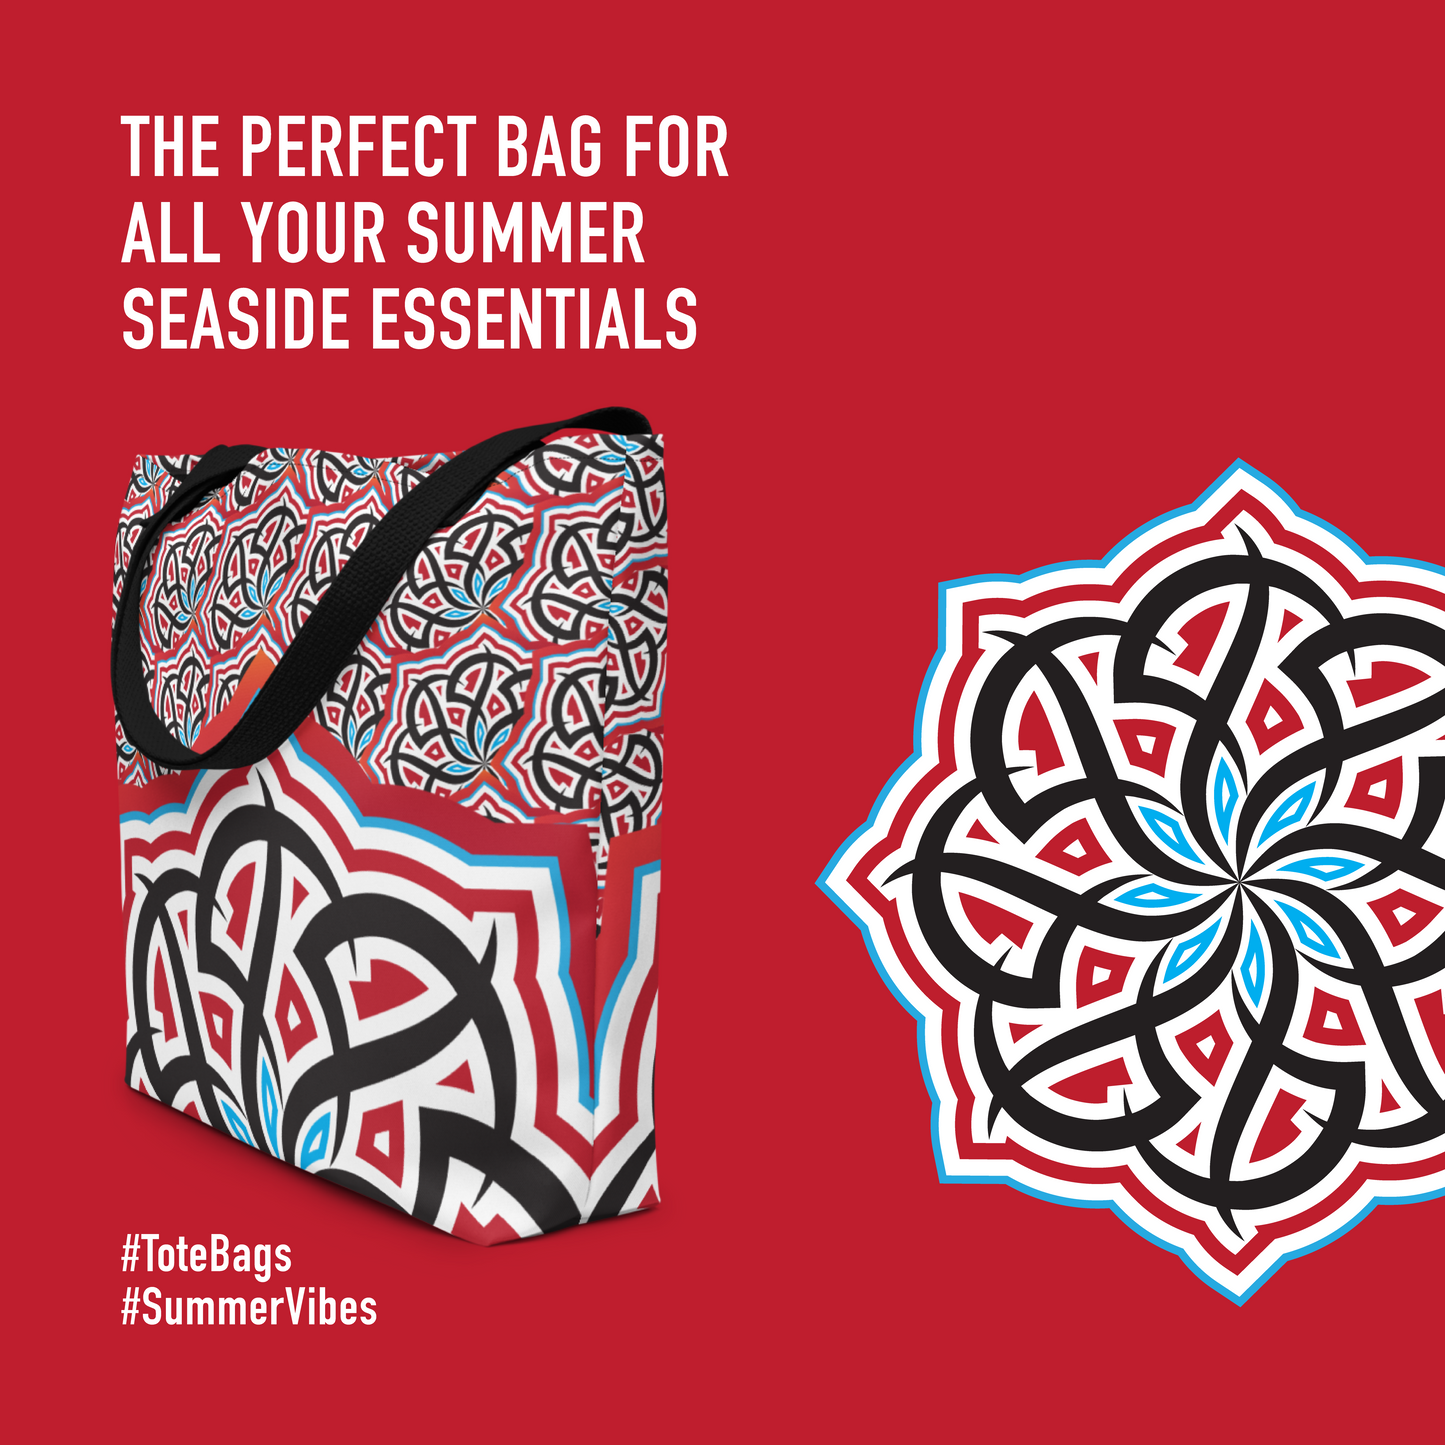 Arabian Summer Dream - All-Over Print Large Tote Bag by Craitza©